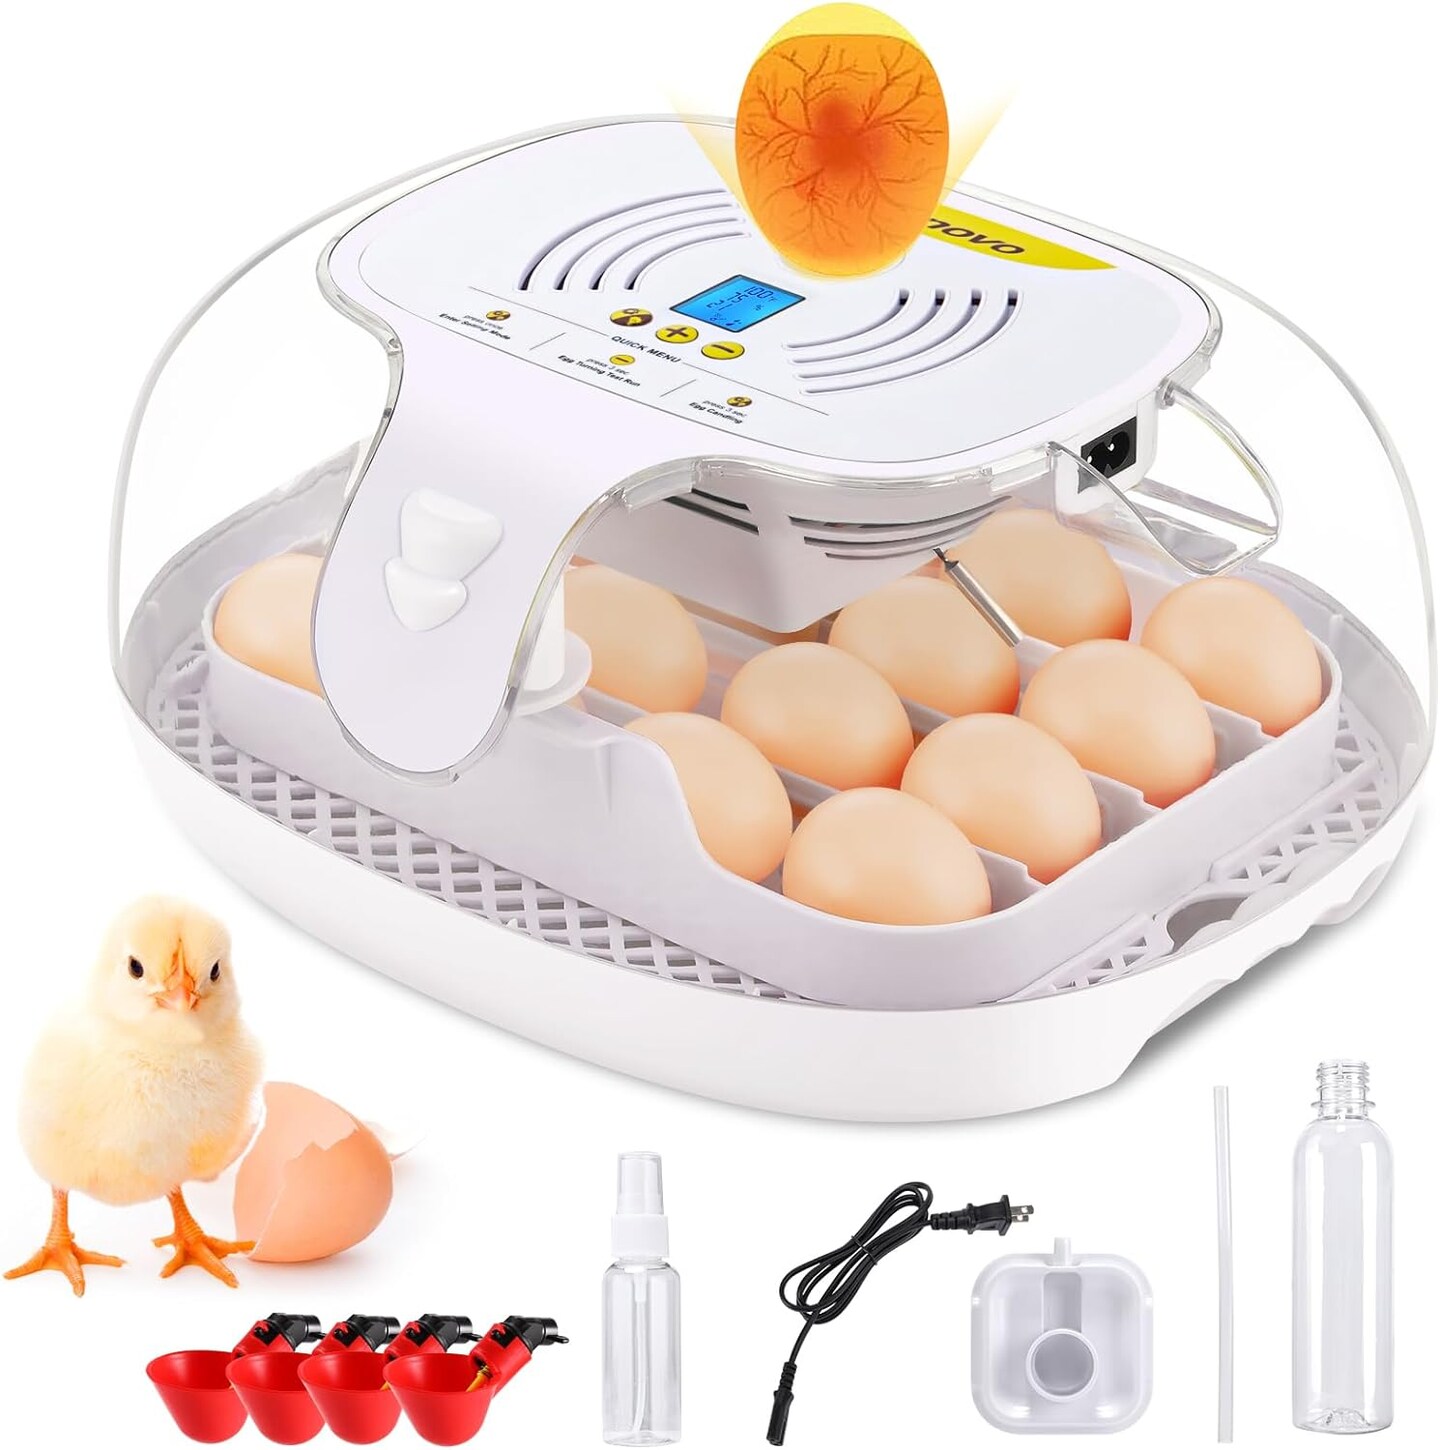 Sailnovo Egg Incubator For Hatching Chicks